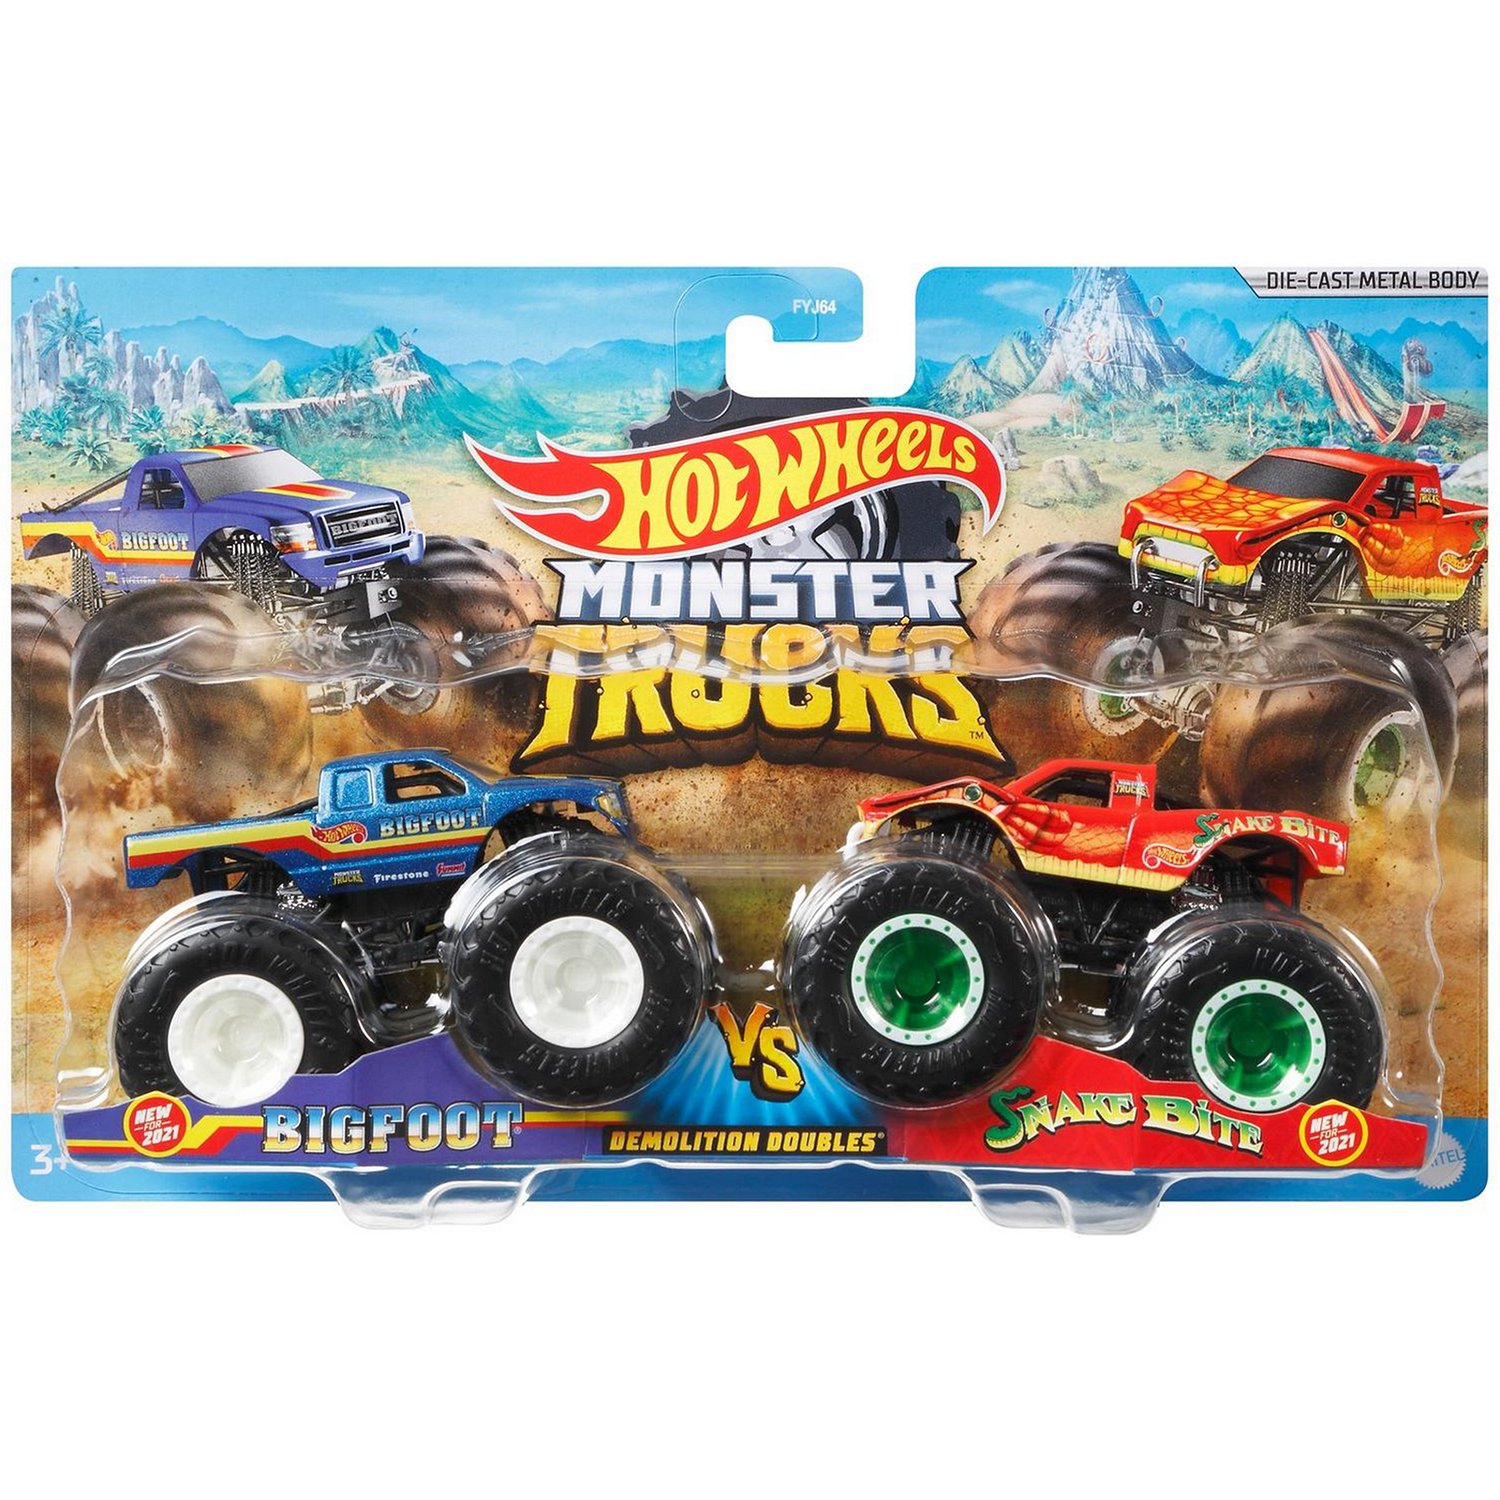 Набор машин Hot Wheels Monster Trucks Bigfoot vs Snake Bite (FYJ64/GTJ51) 1:64